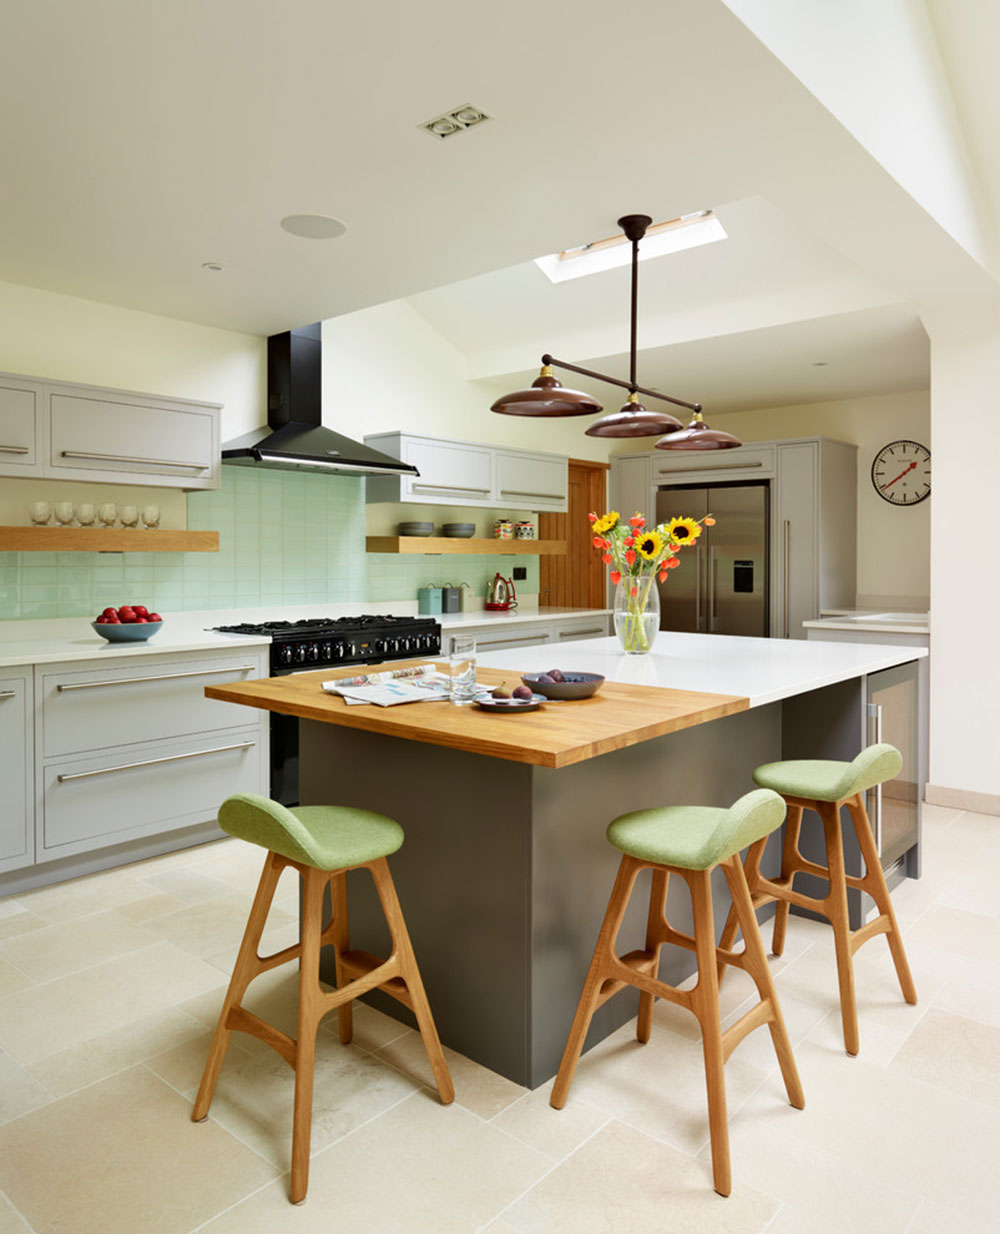 60 Kitchen Interior Design Ideas (With Tips To Make One)